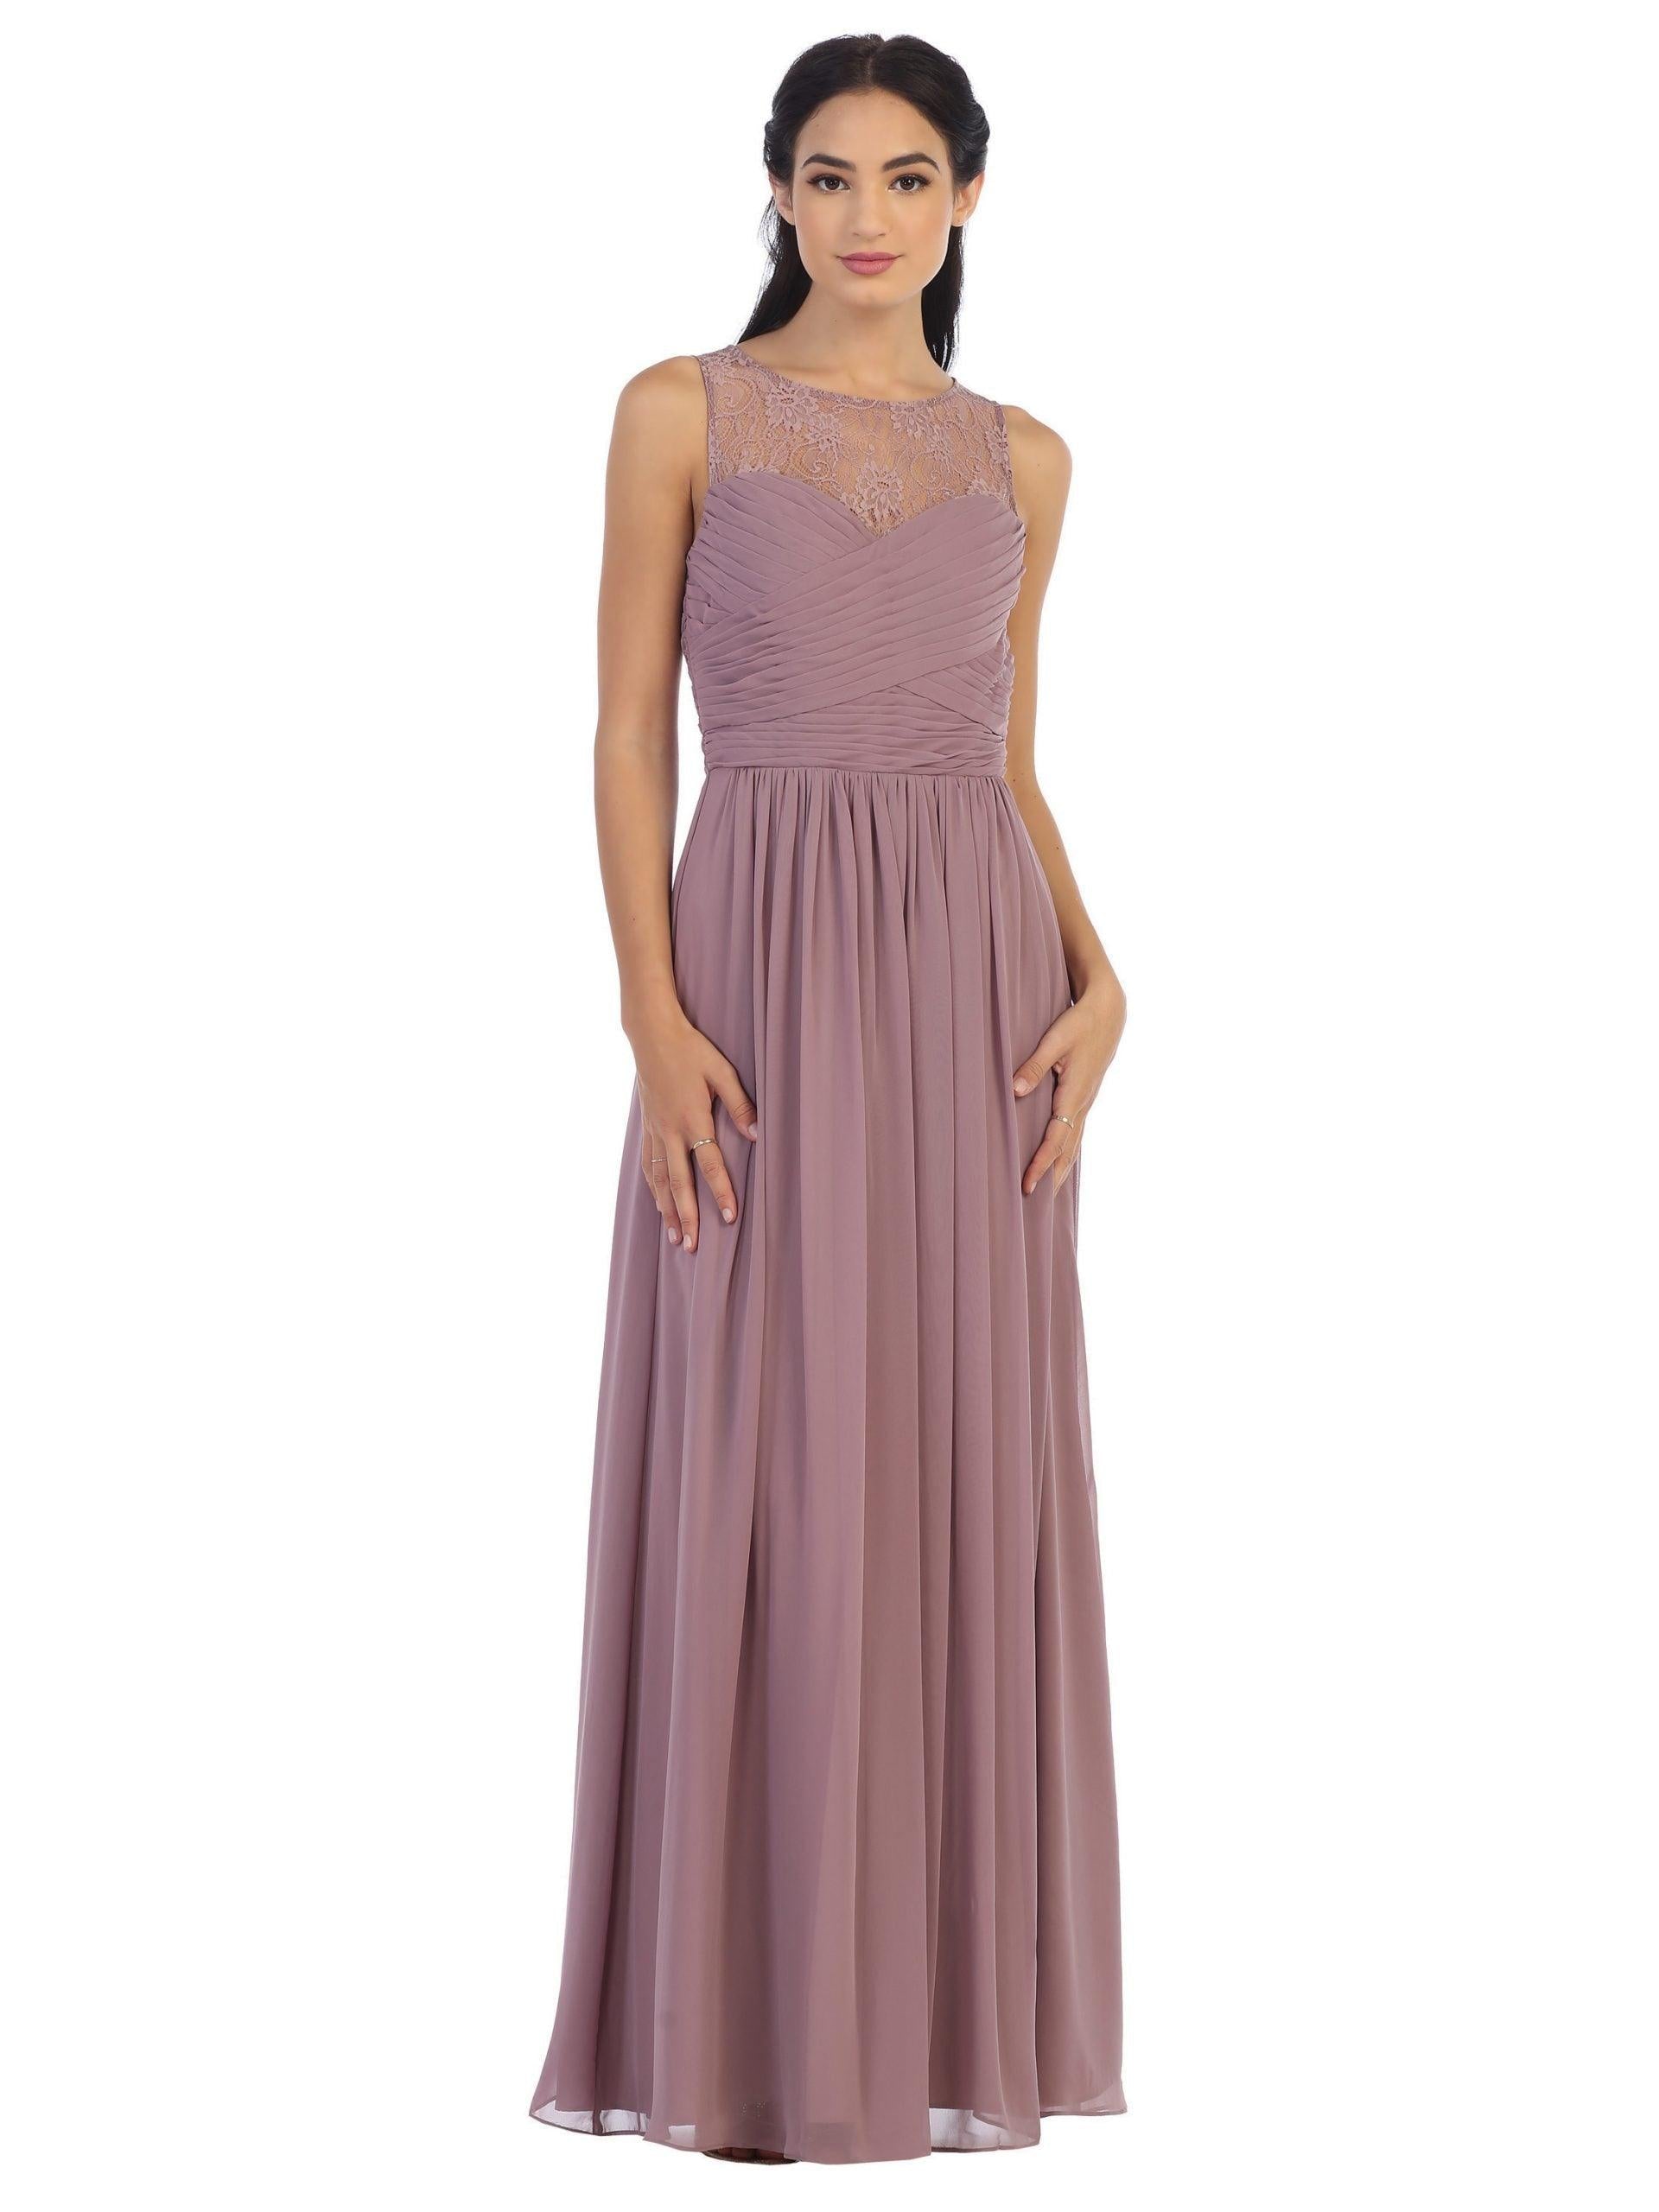 Chiffon Long Sleeveless Bridesmaid Dress - The Dress Outlet